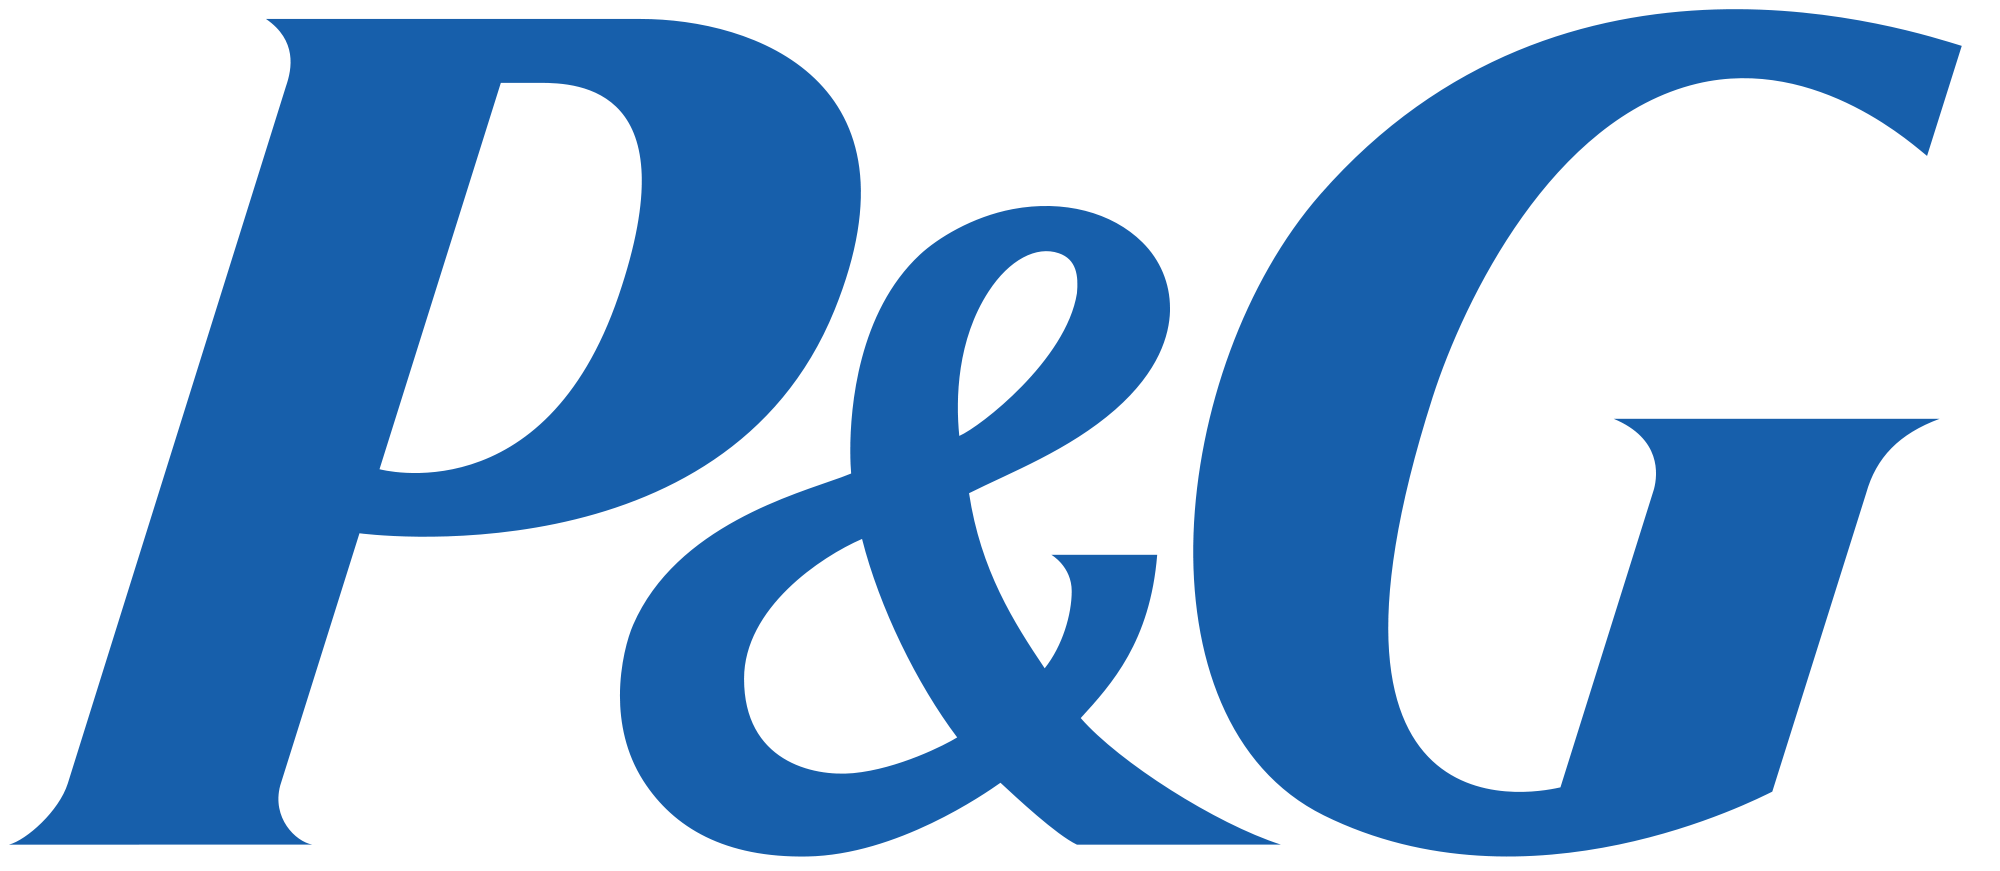 изображение логотипа бренда Procter Gamble